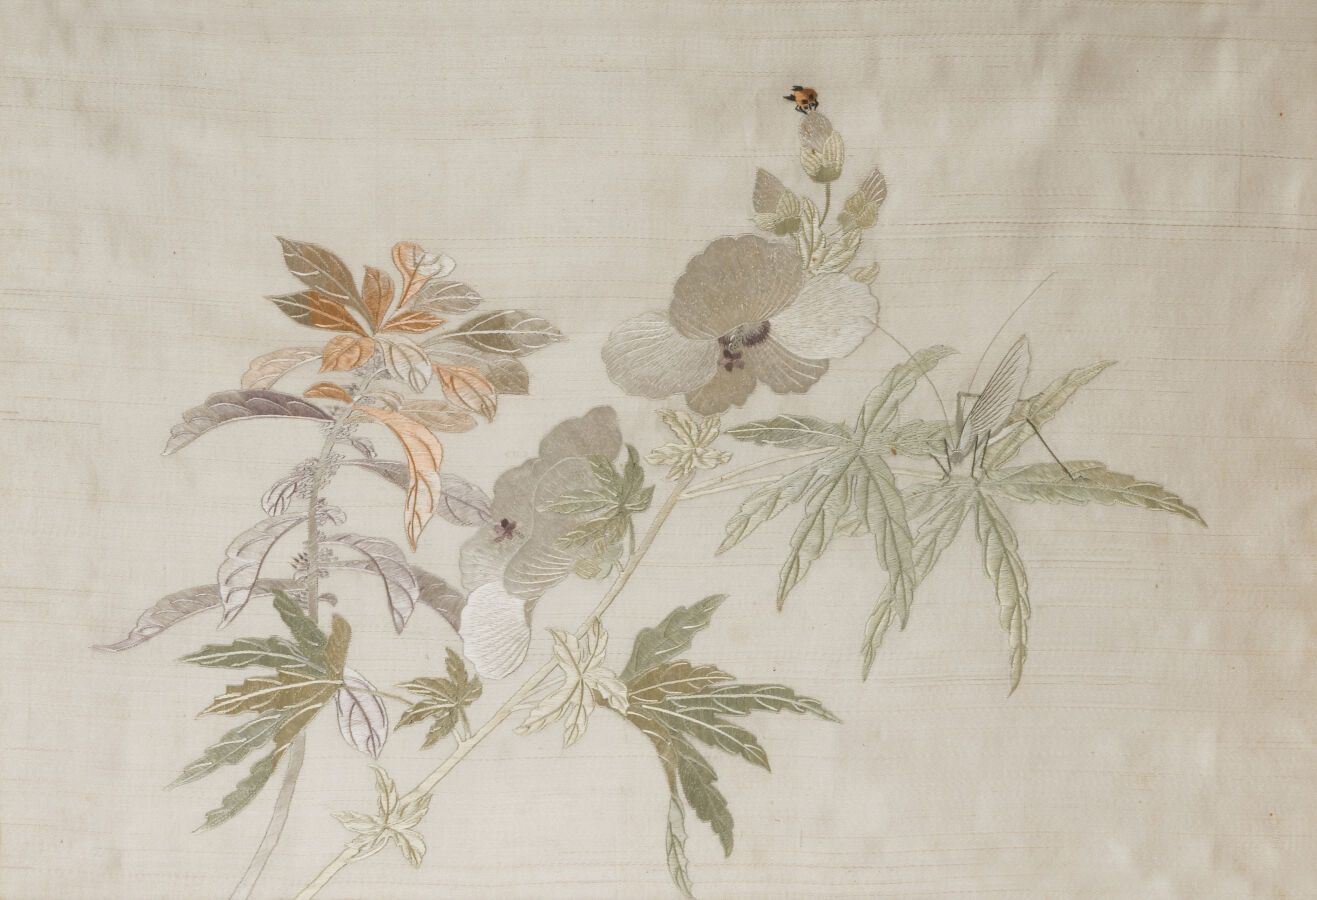 Null 绣花的丝绸面板
中国，19世纪末/20世纪初
饰以花枝和蚱蜢，用玻璃装框 
外观尺寸：34.5 x 49.5厘米